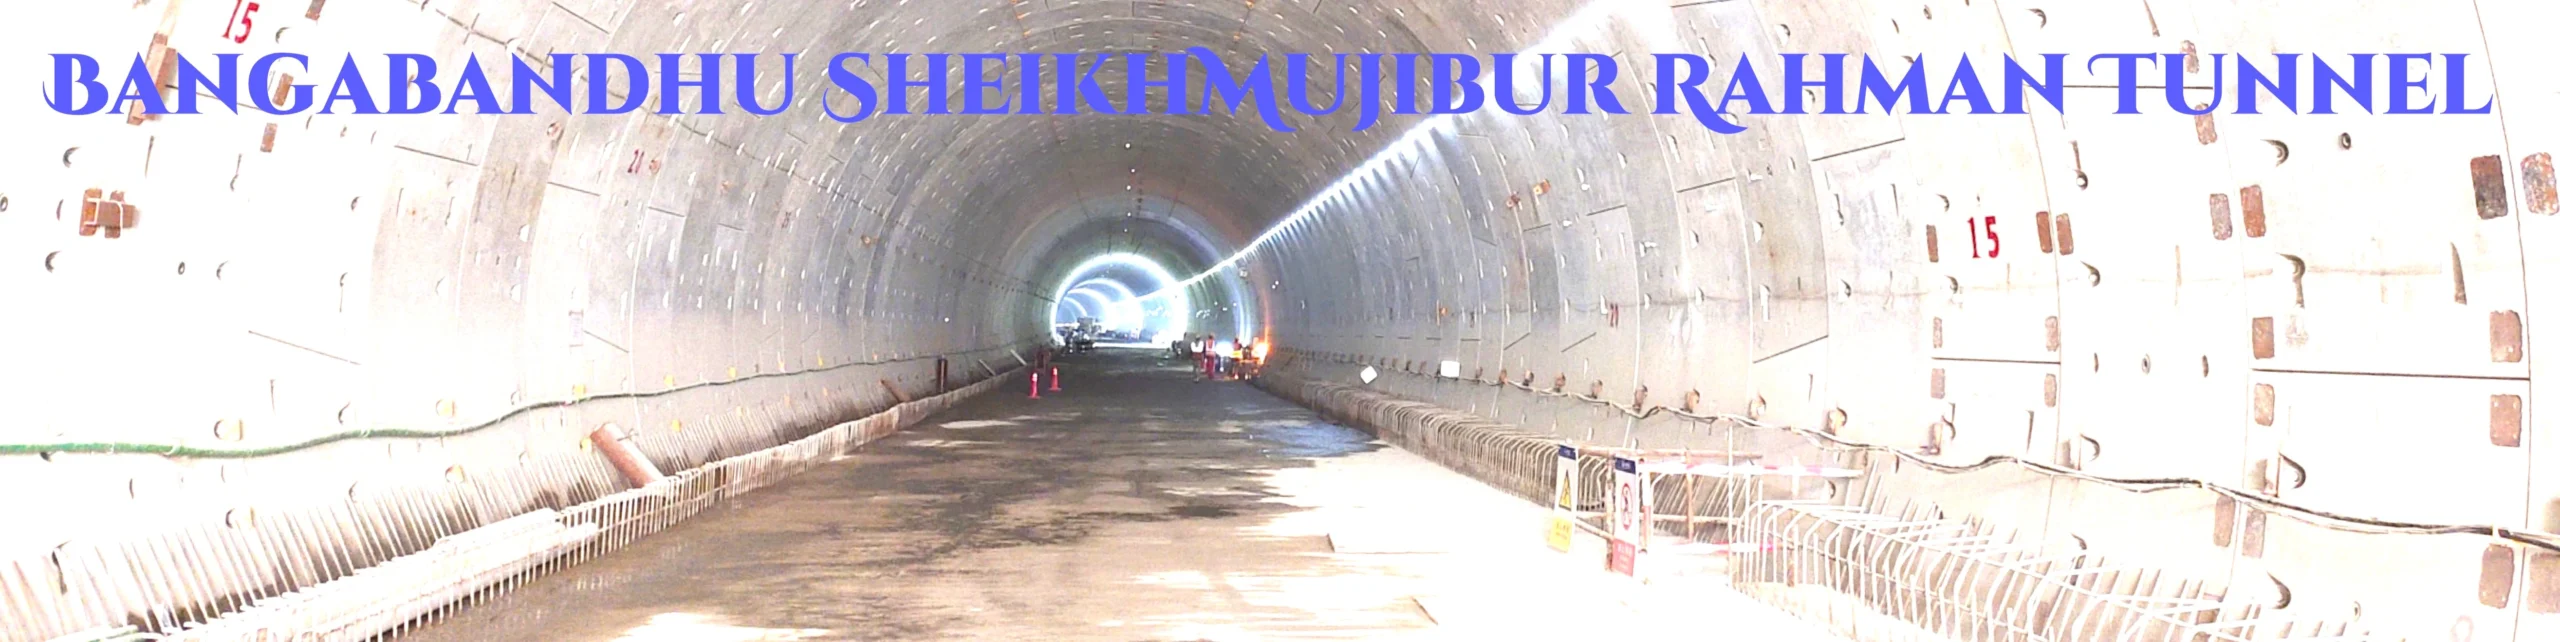 The Bangabandhu Sheikh Mujibur Rahman Tunnel (or Karnaphuli Tunnel)